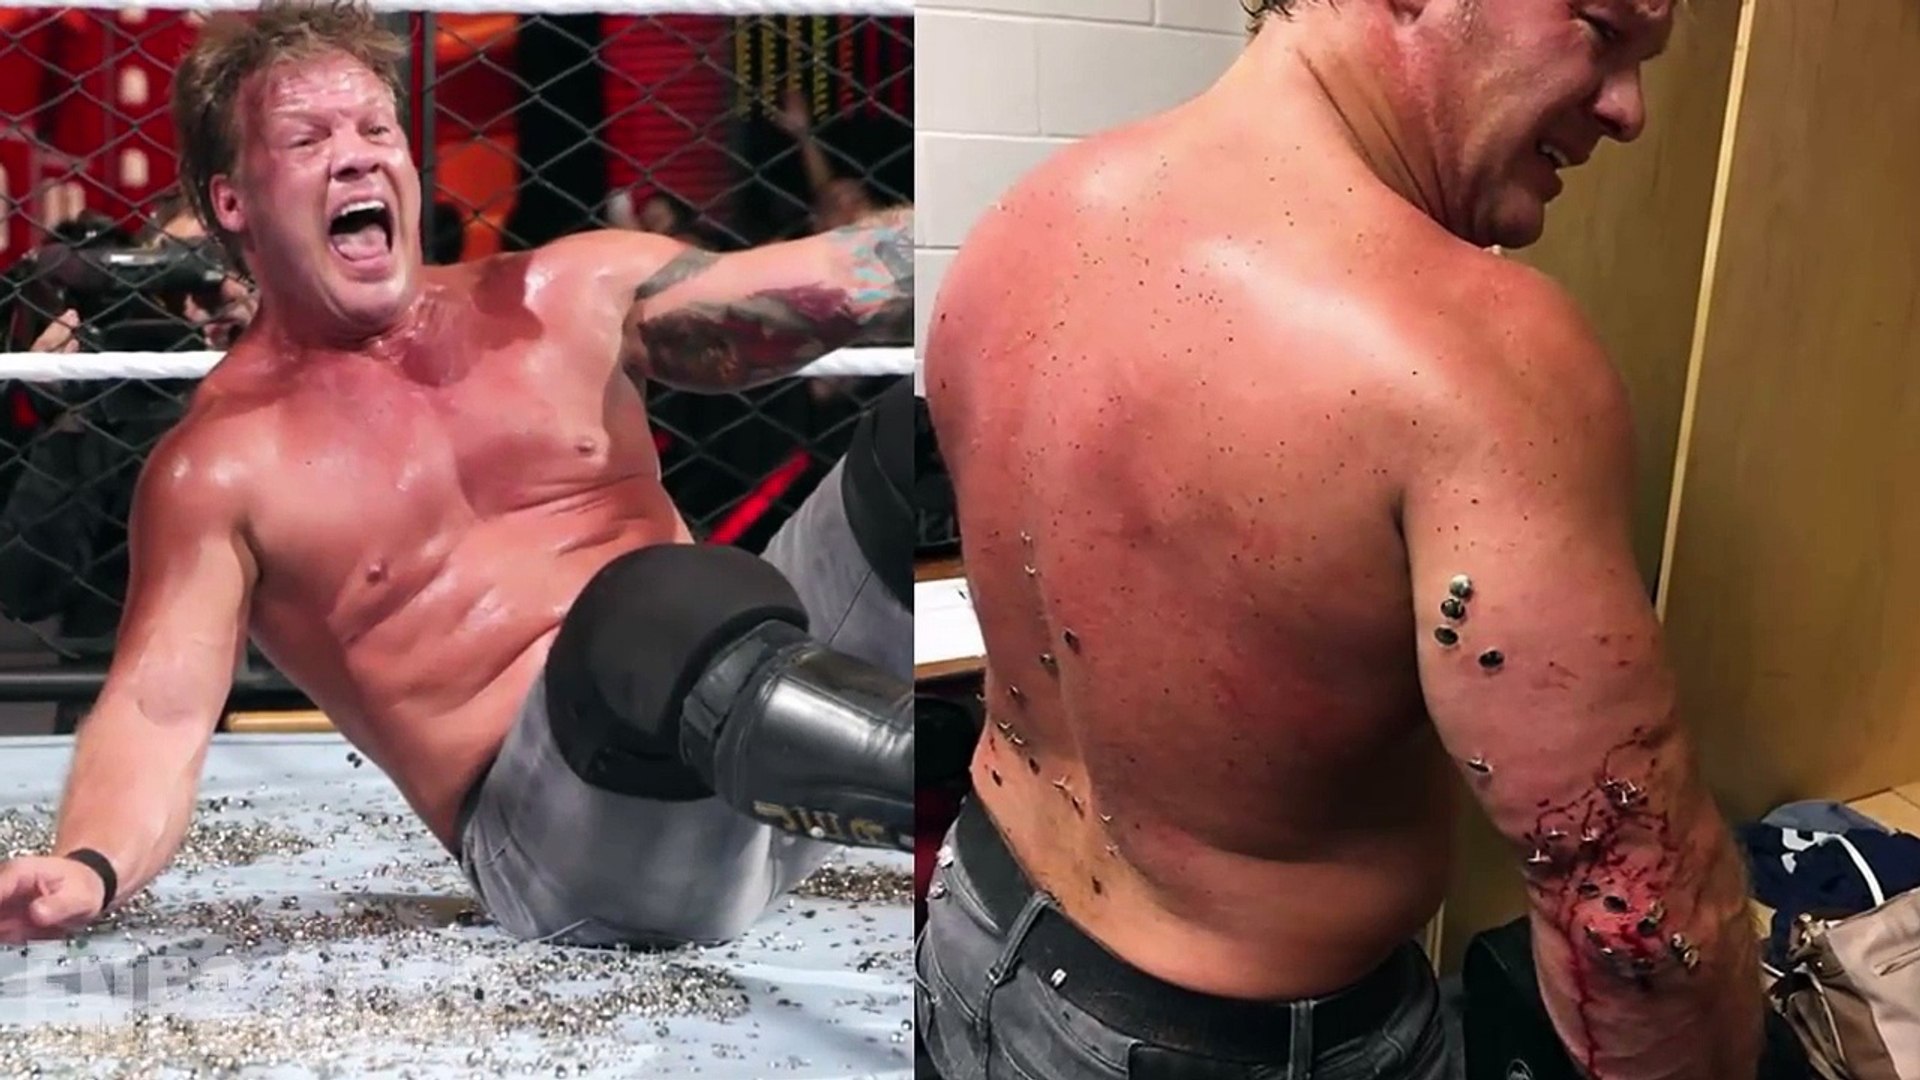 Top 10 Worst Injuries in WWE - video 